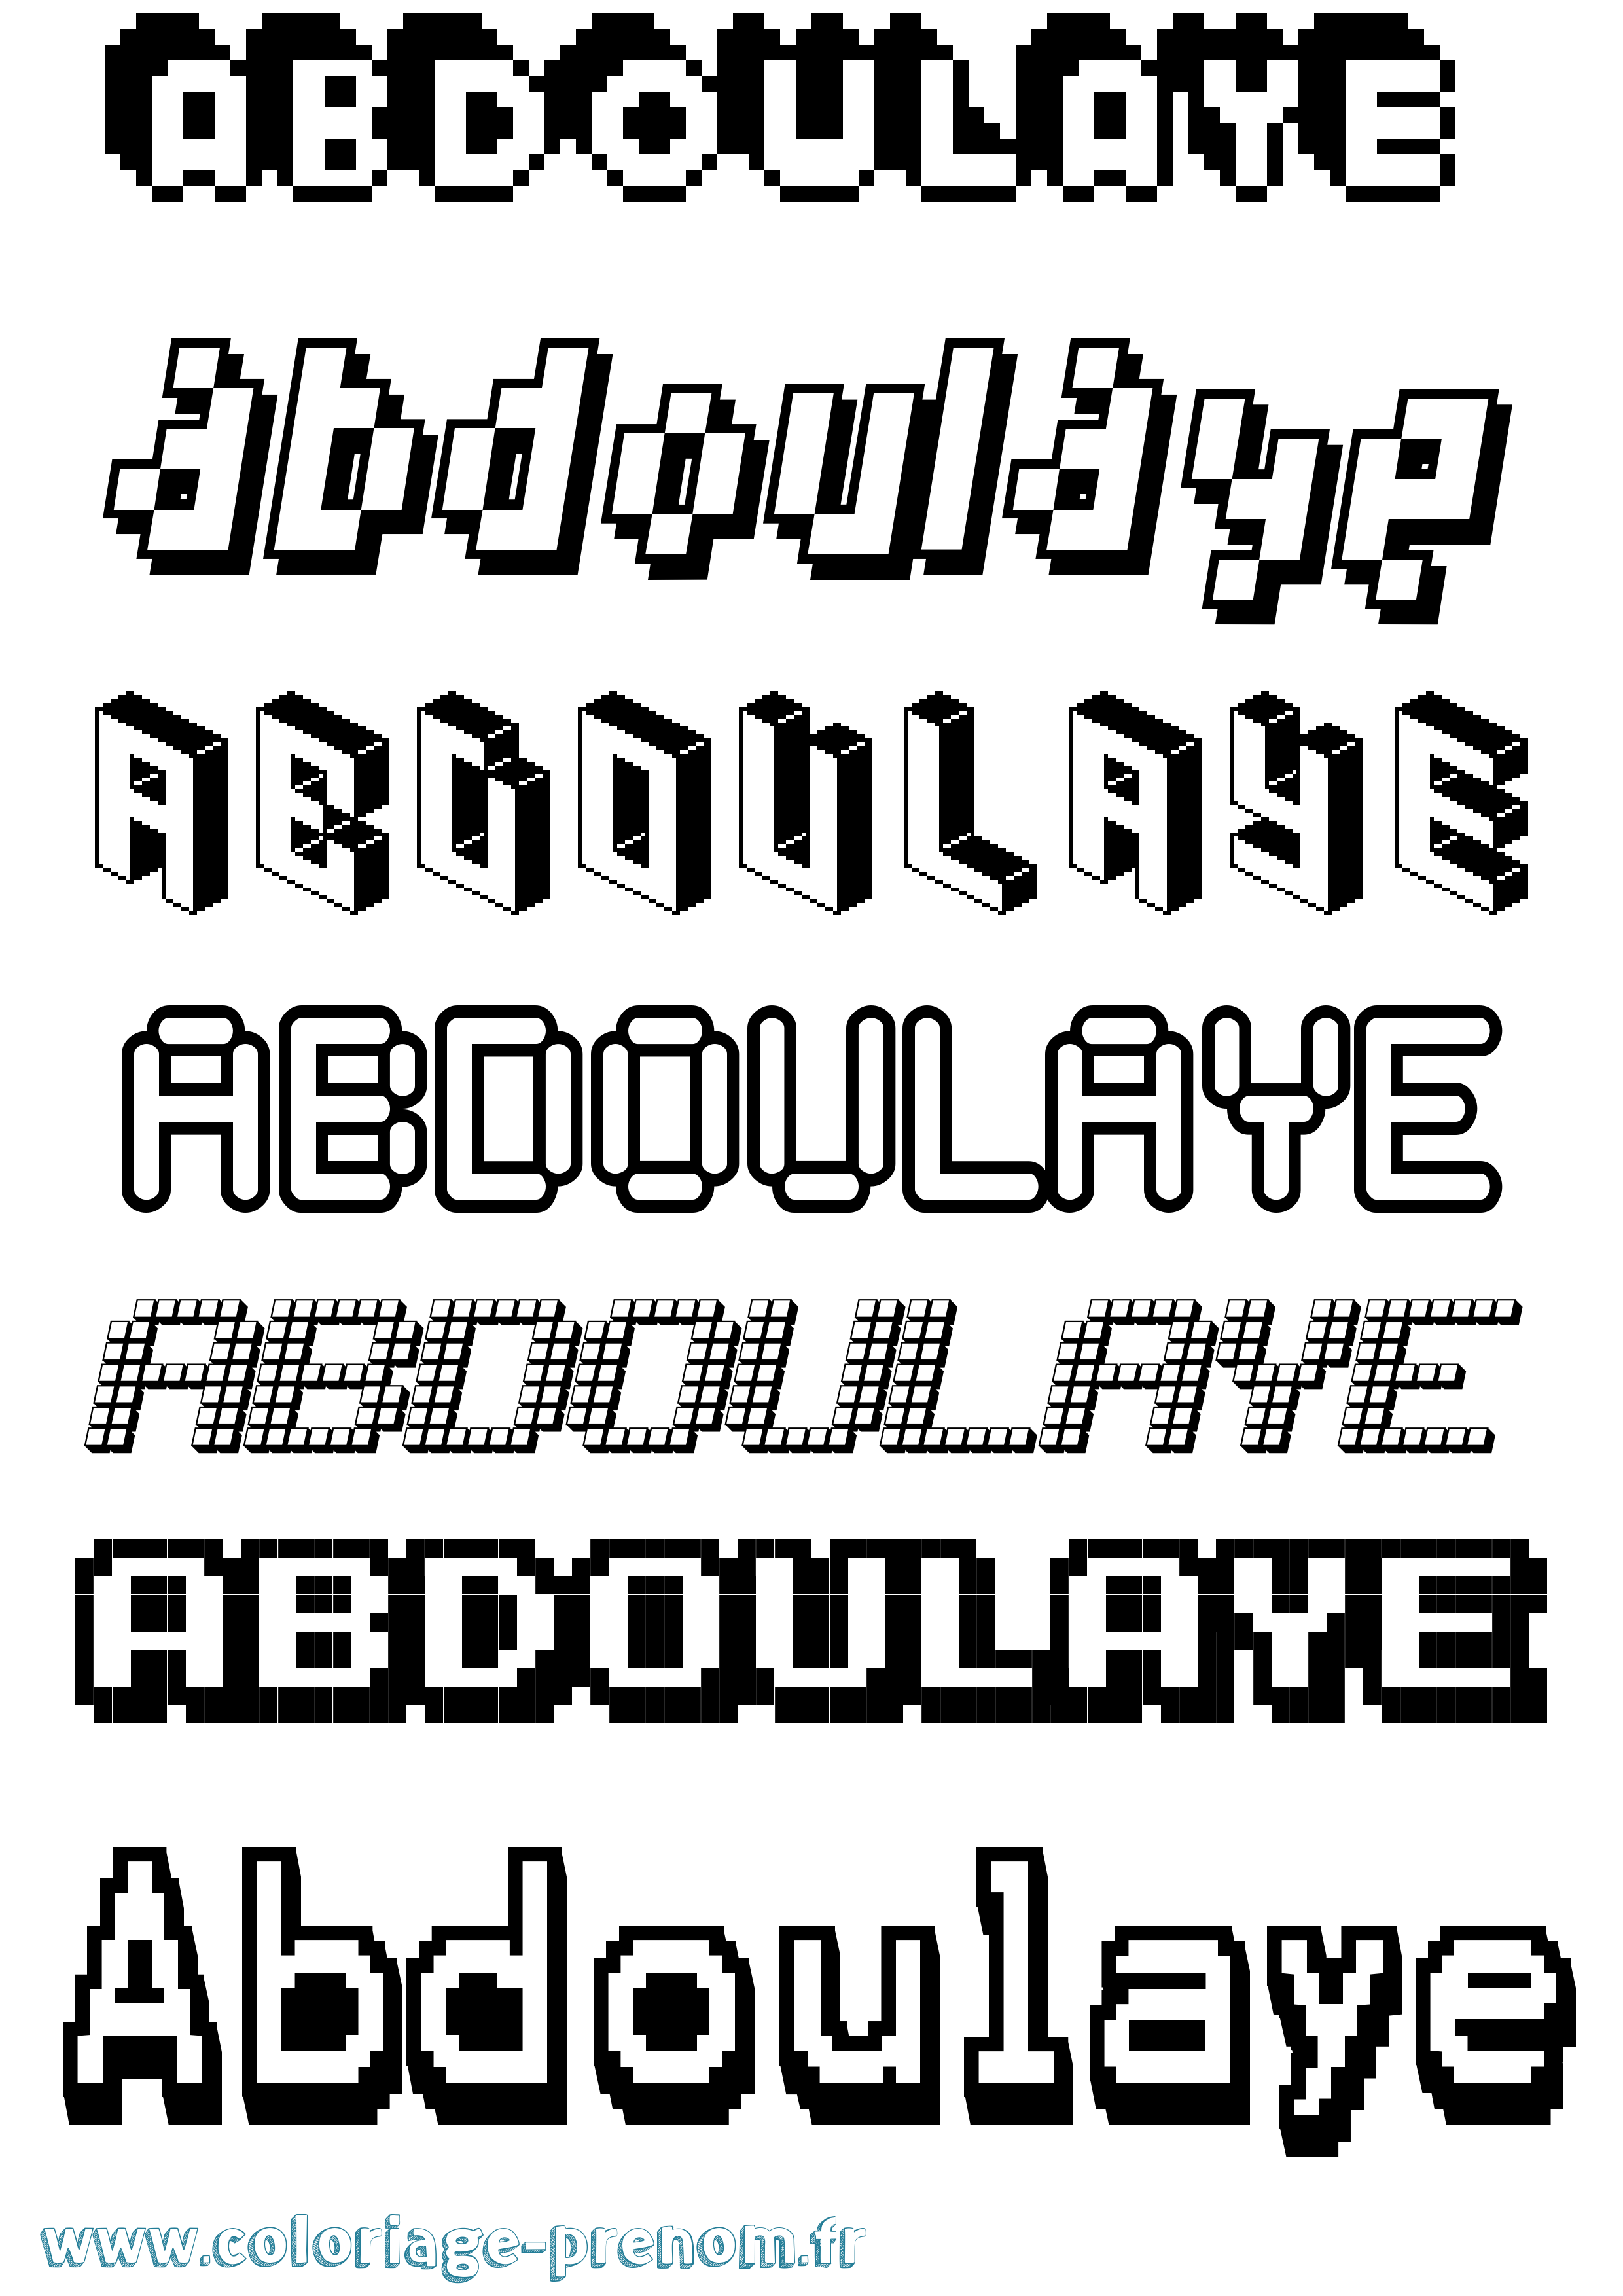 Coloriage prénom Abdoulaye